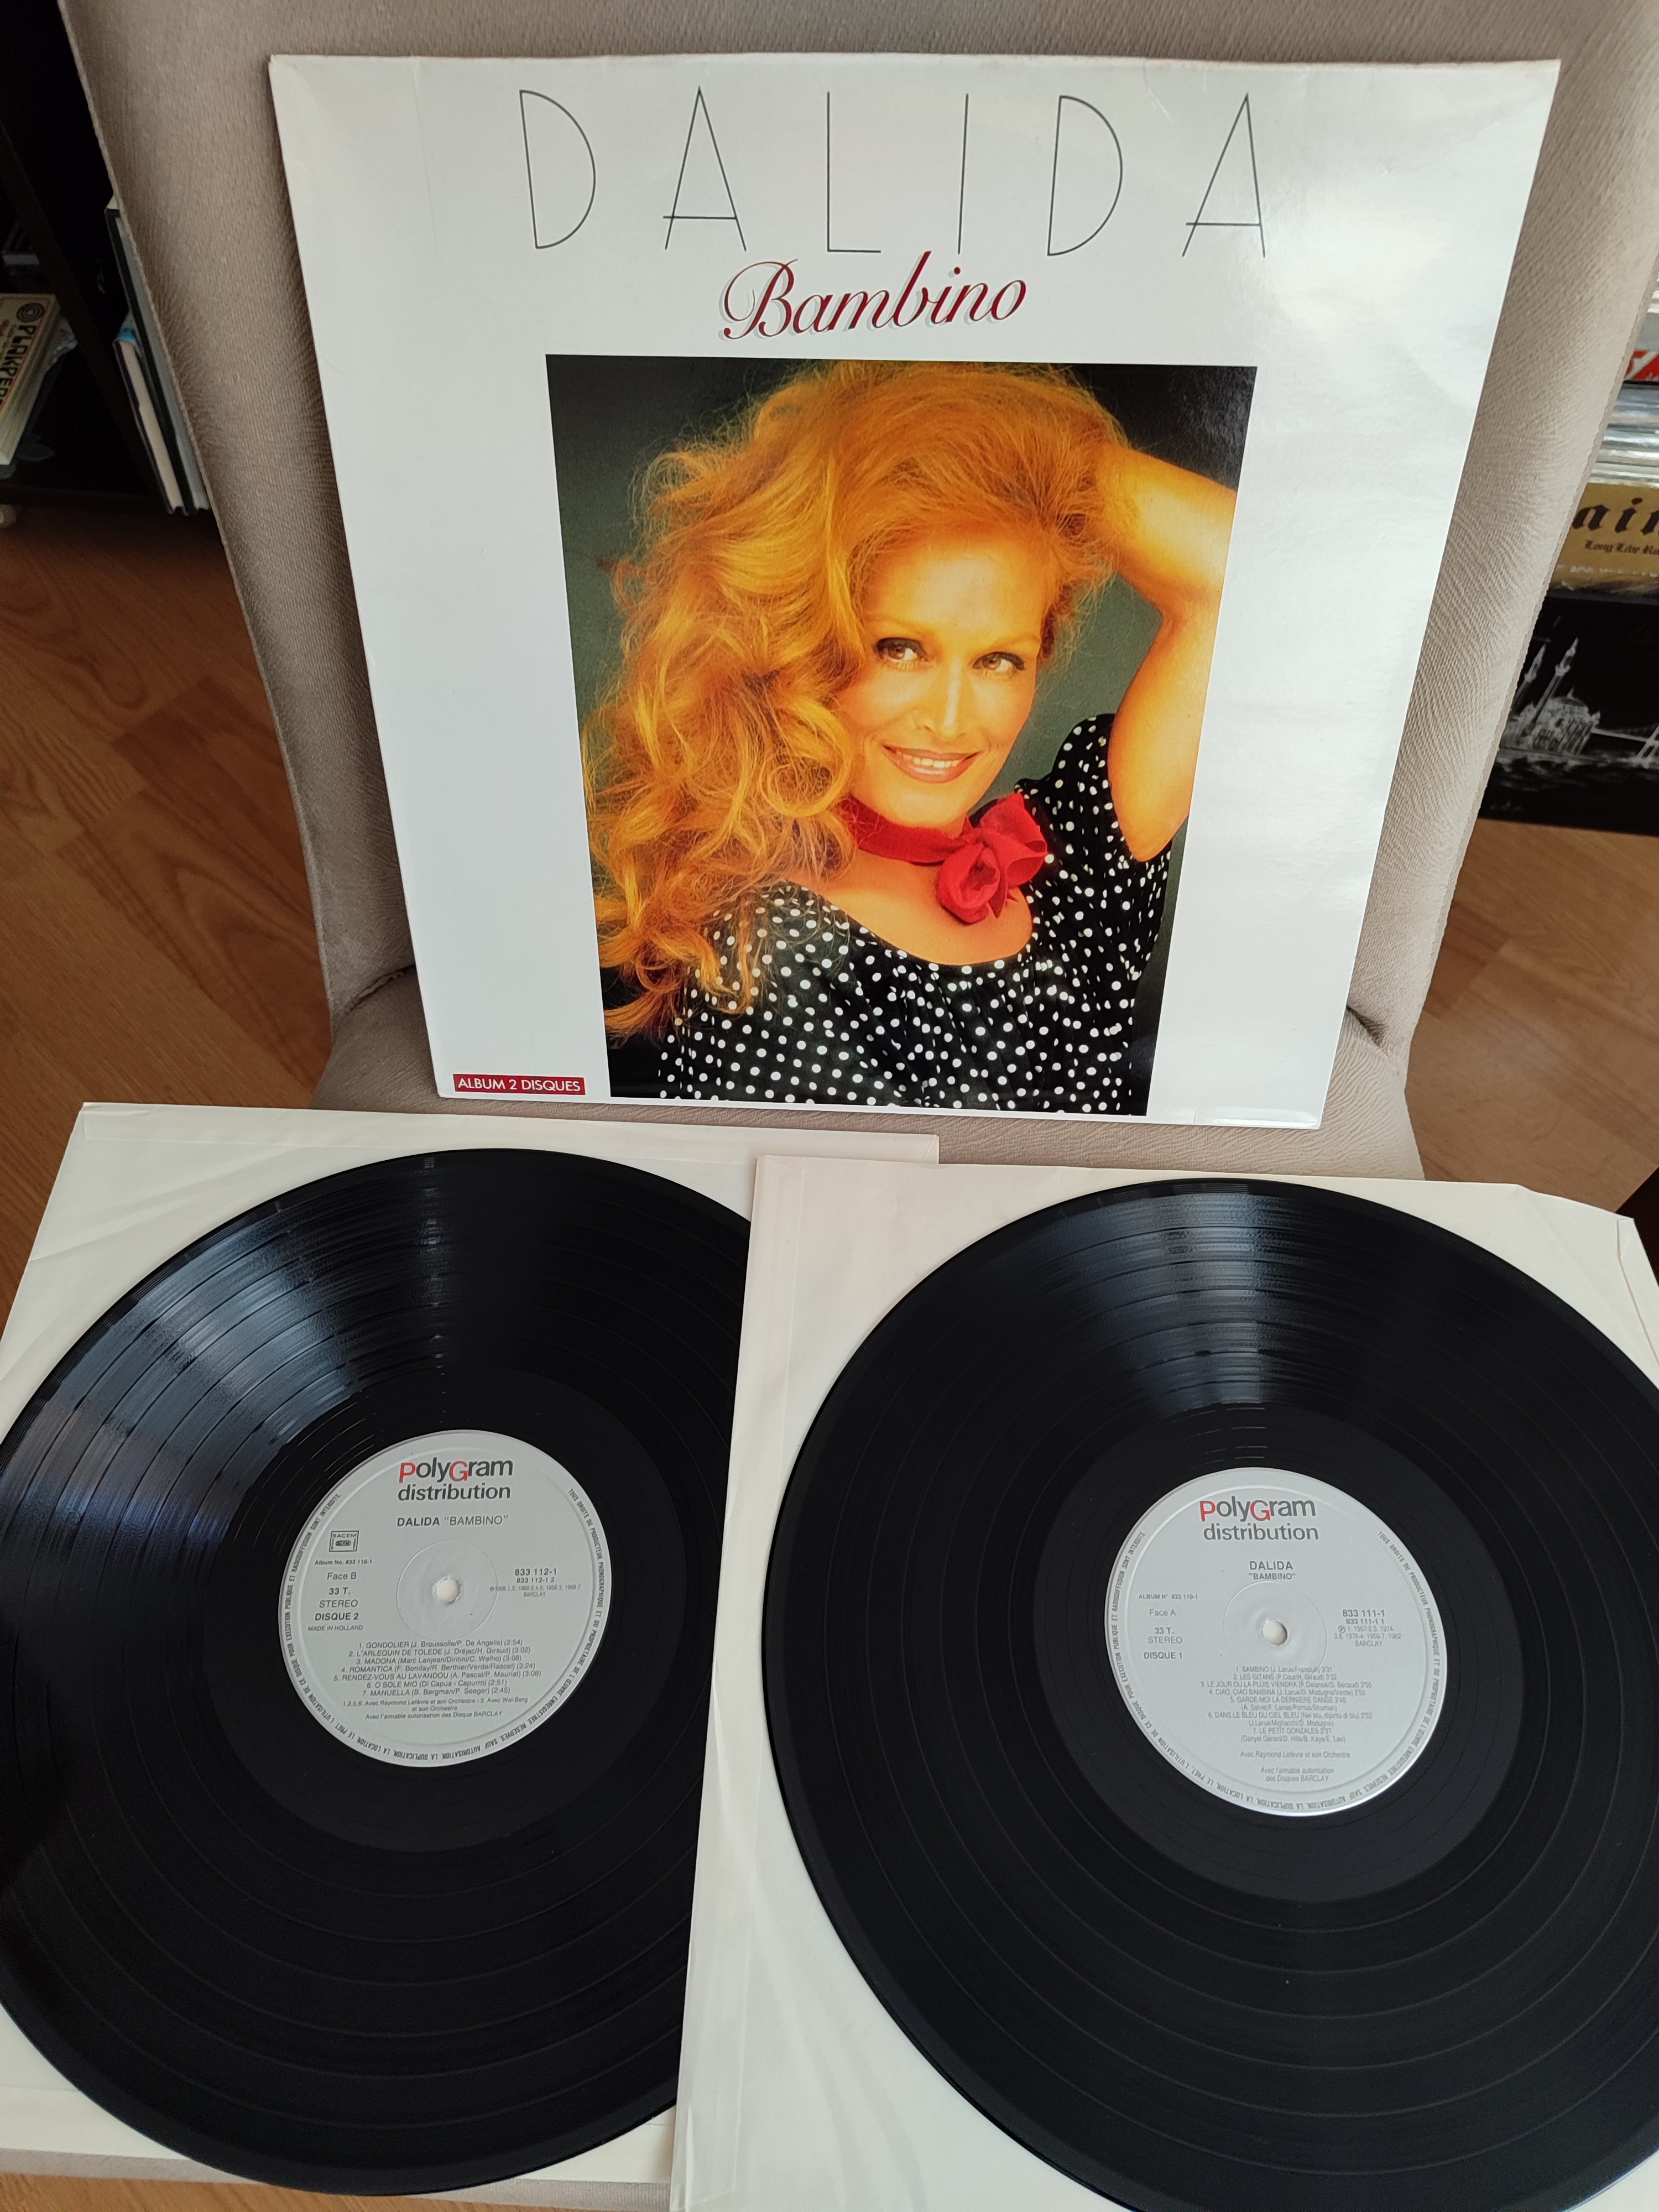 DALIDA - Bambino - 1987 Fransa Basım Double LP Plak - Temiz 2. el